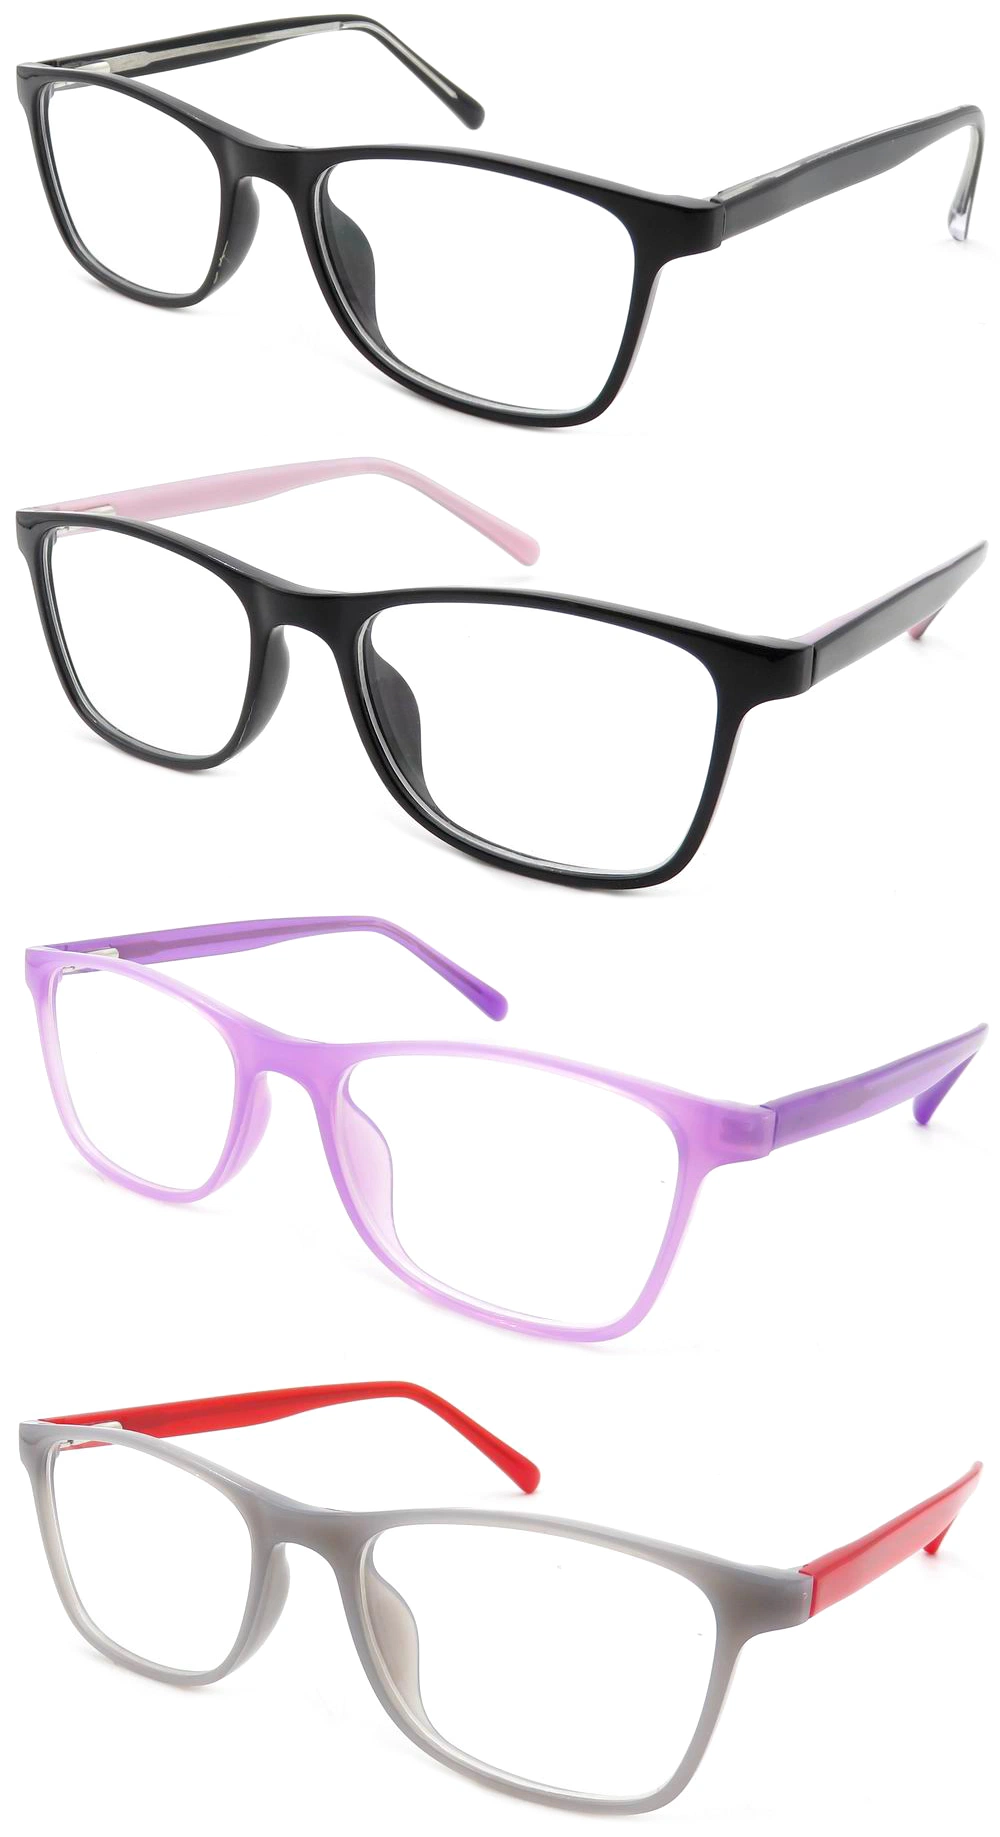 Super Light Anti Blue Light Glasses Tr90 Frame and Acetate Temple Material Eye Glasses for Computer Kids